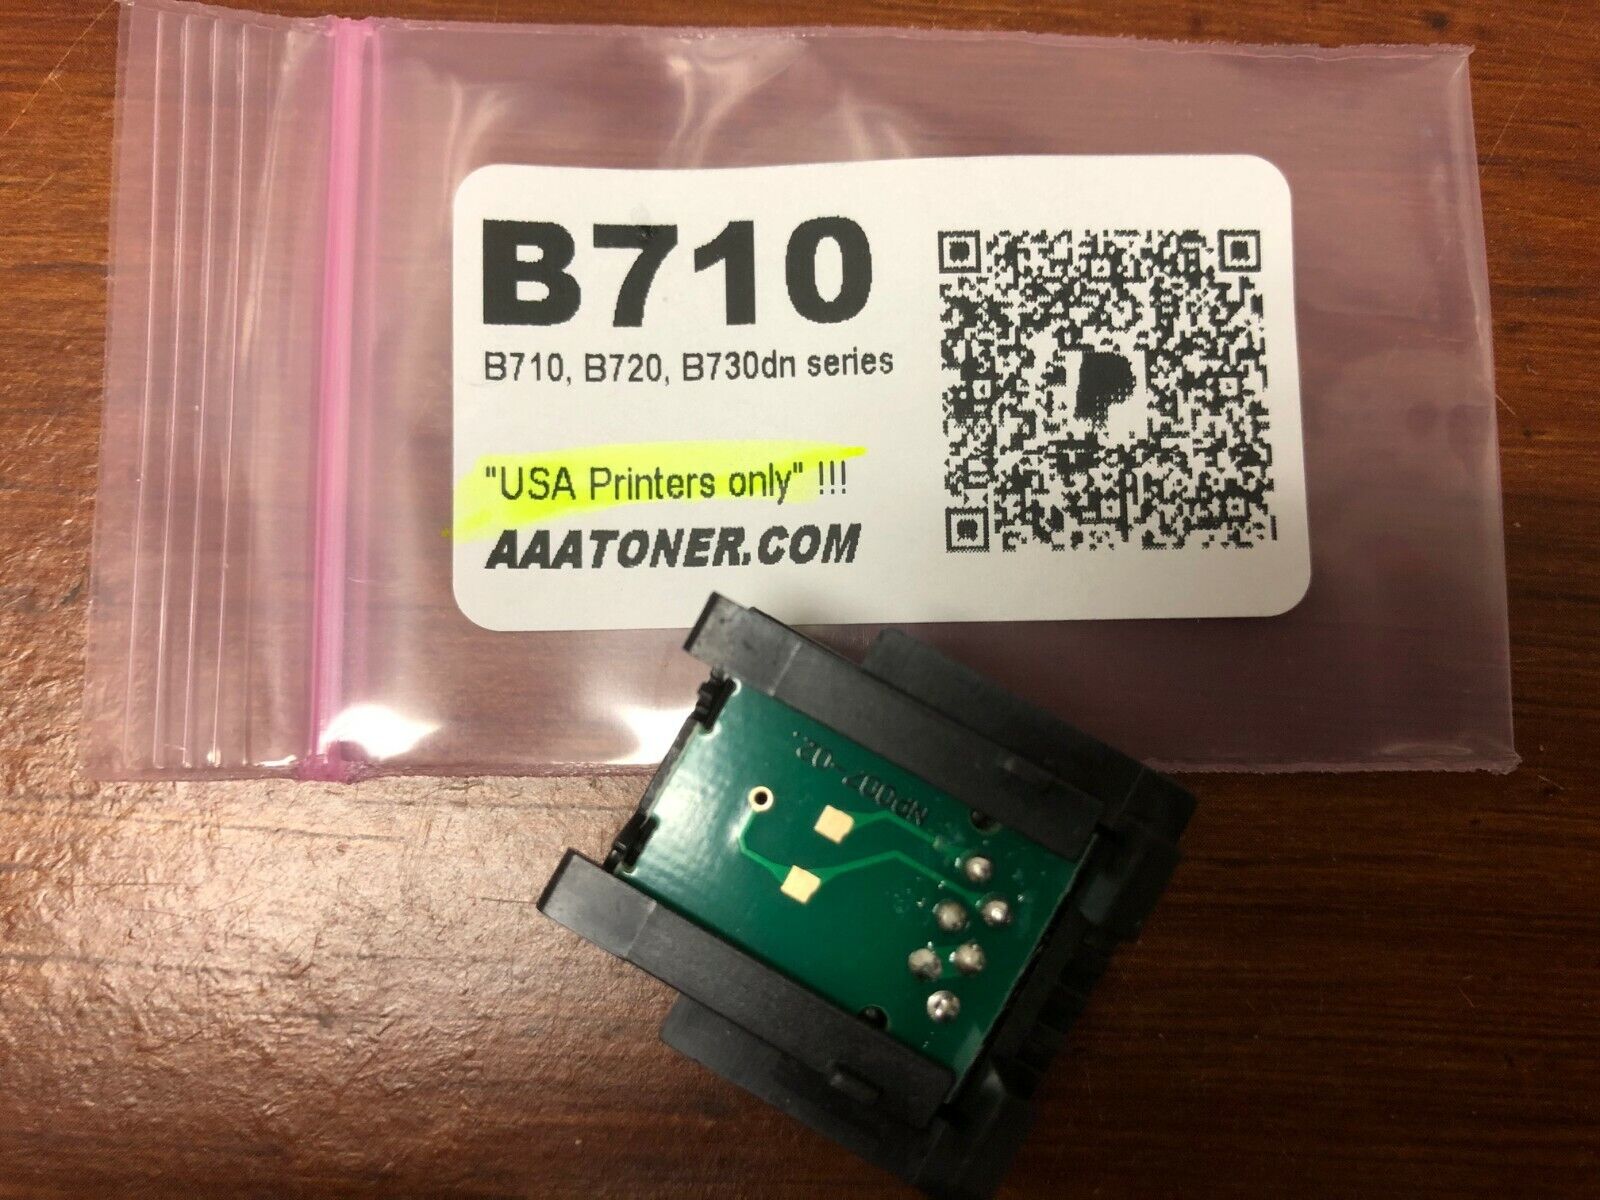 1 x Toner Chip for OKI B710, B720, B730dn Printer Refill (52123601, 01279001)